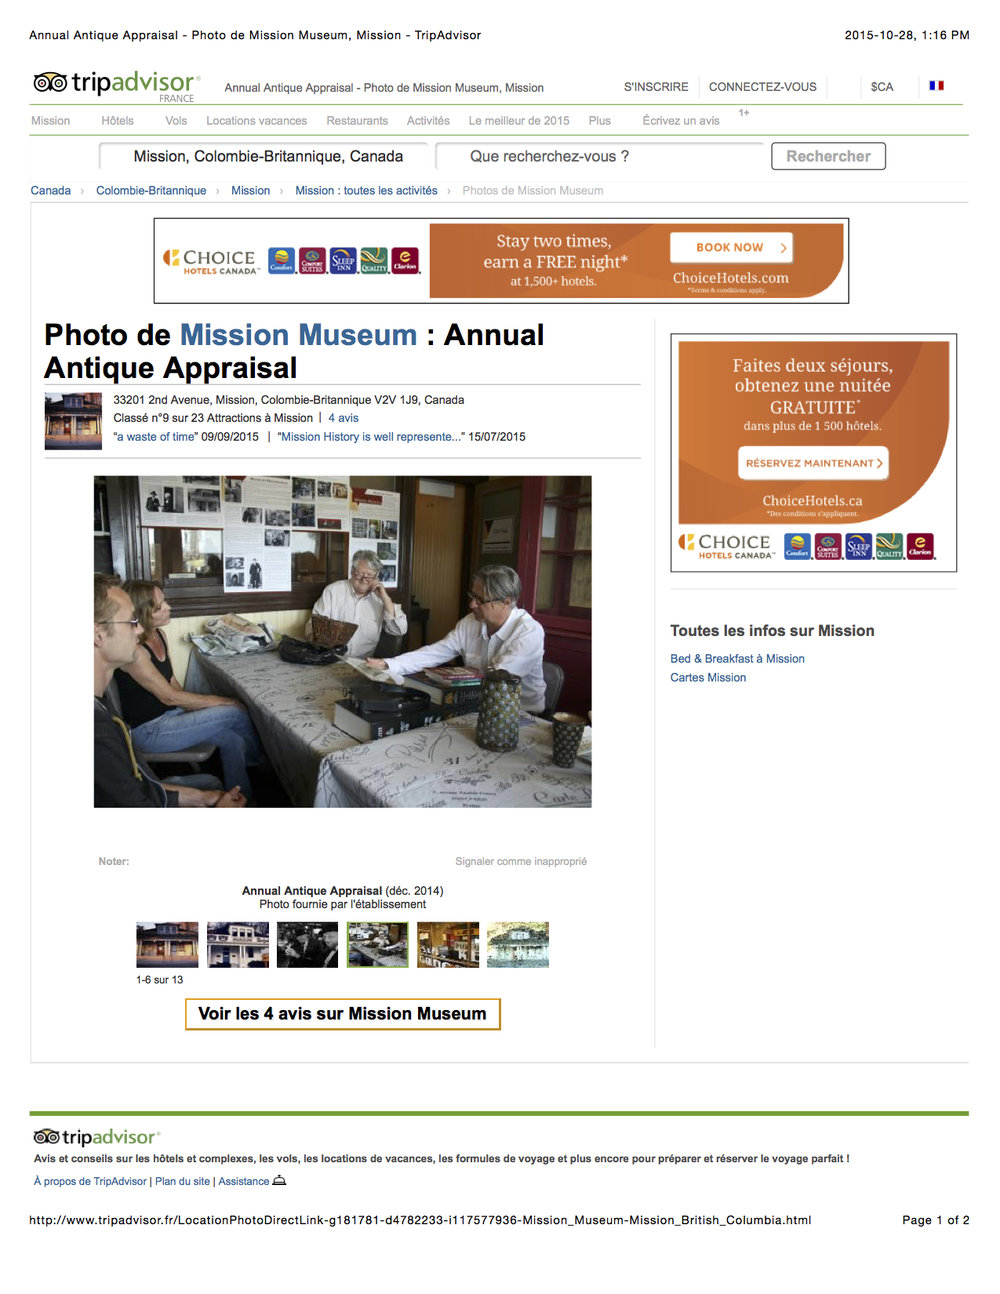 Annual+Antique+Appraisal+-+Photo+de+Mission+Museum,+Mission+-+TripAdvisor.jpg